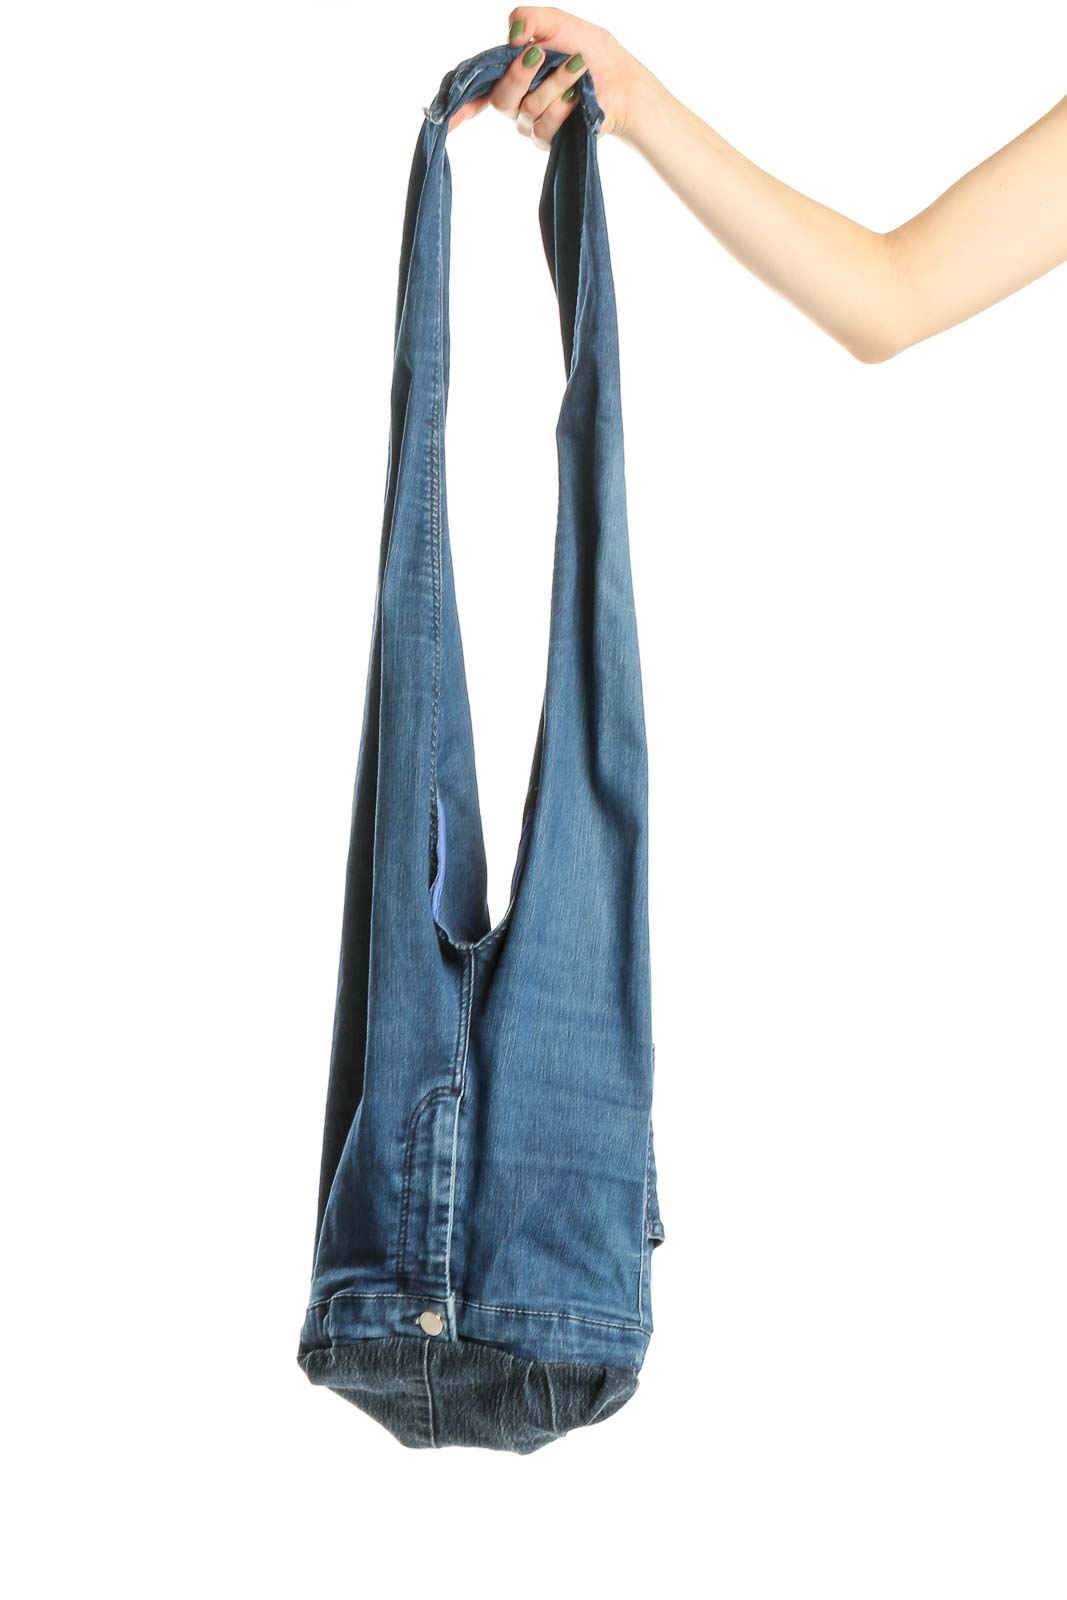 Blue Jeans Reworked Bag Front